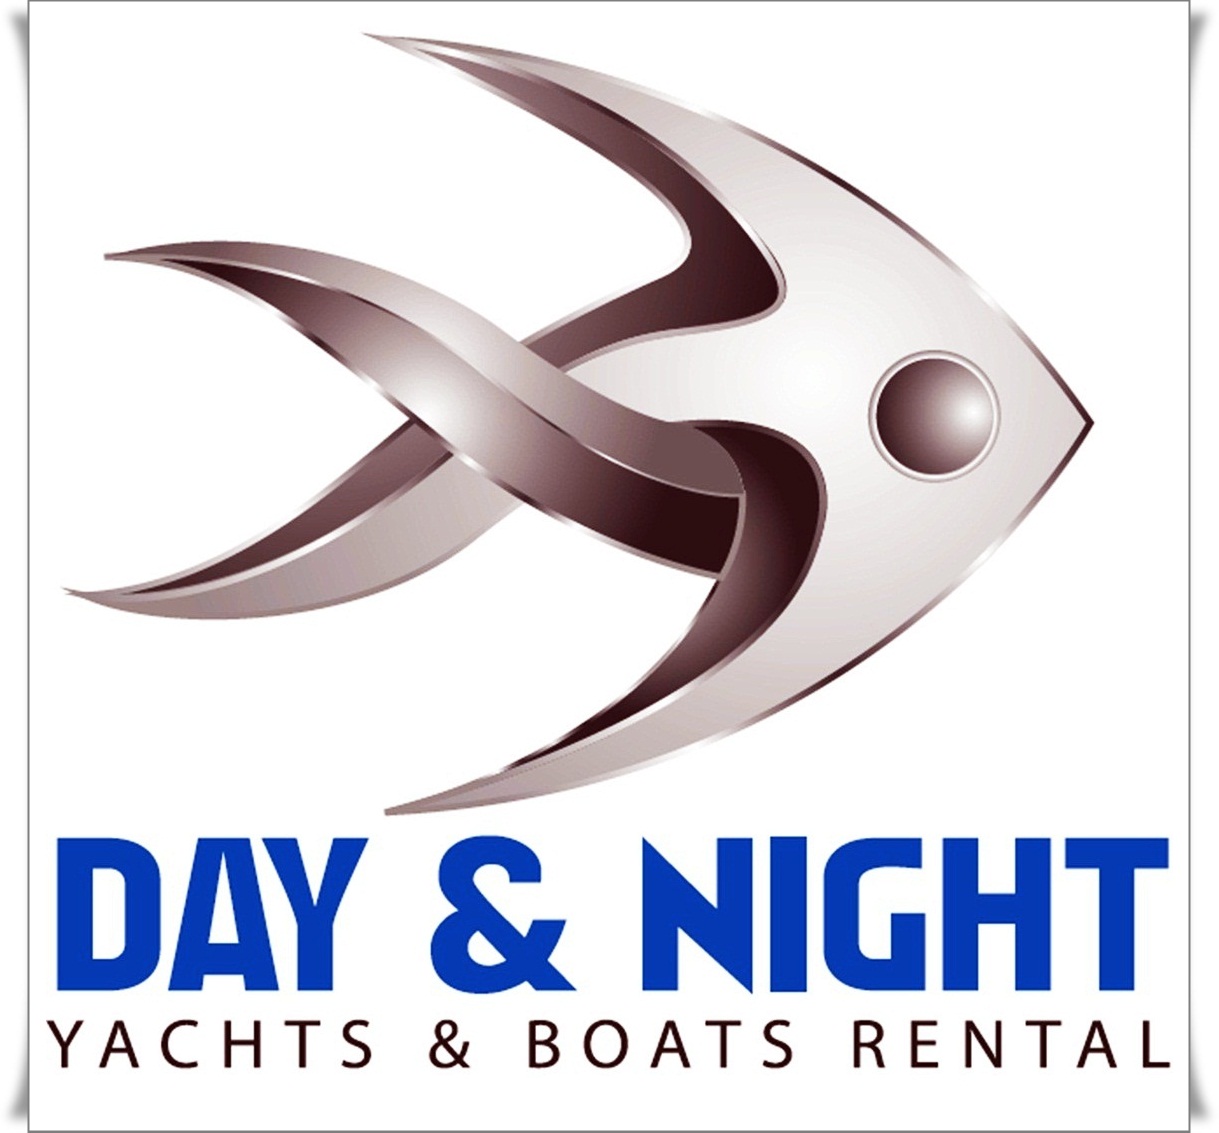 Day & Night Yachts & Boats Rental